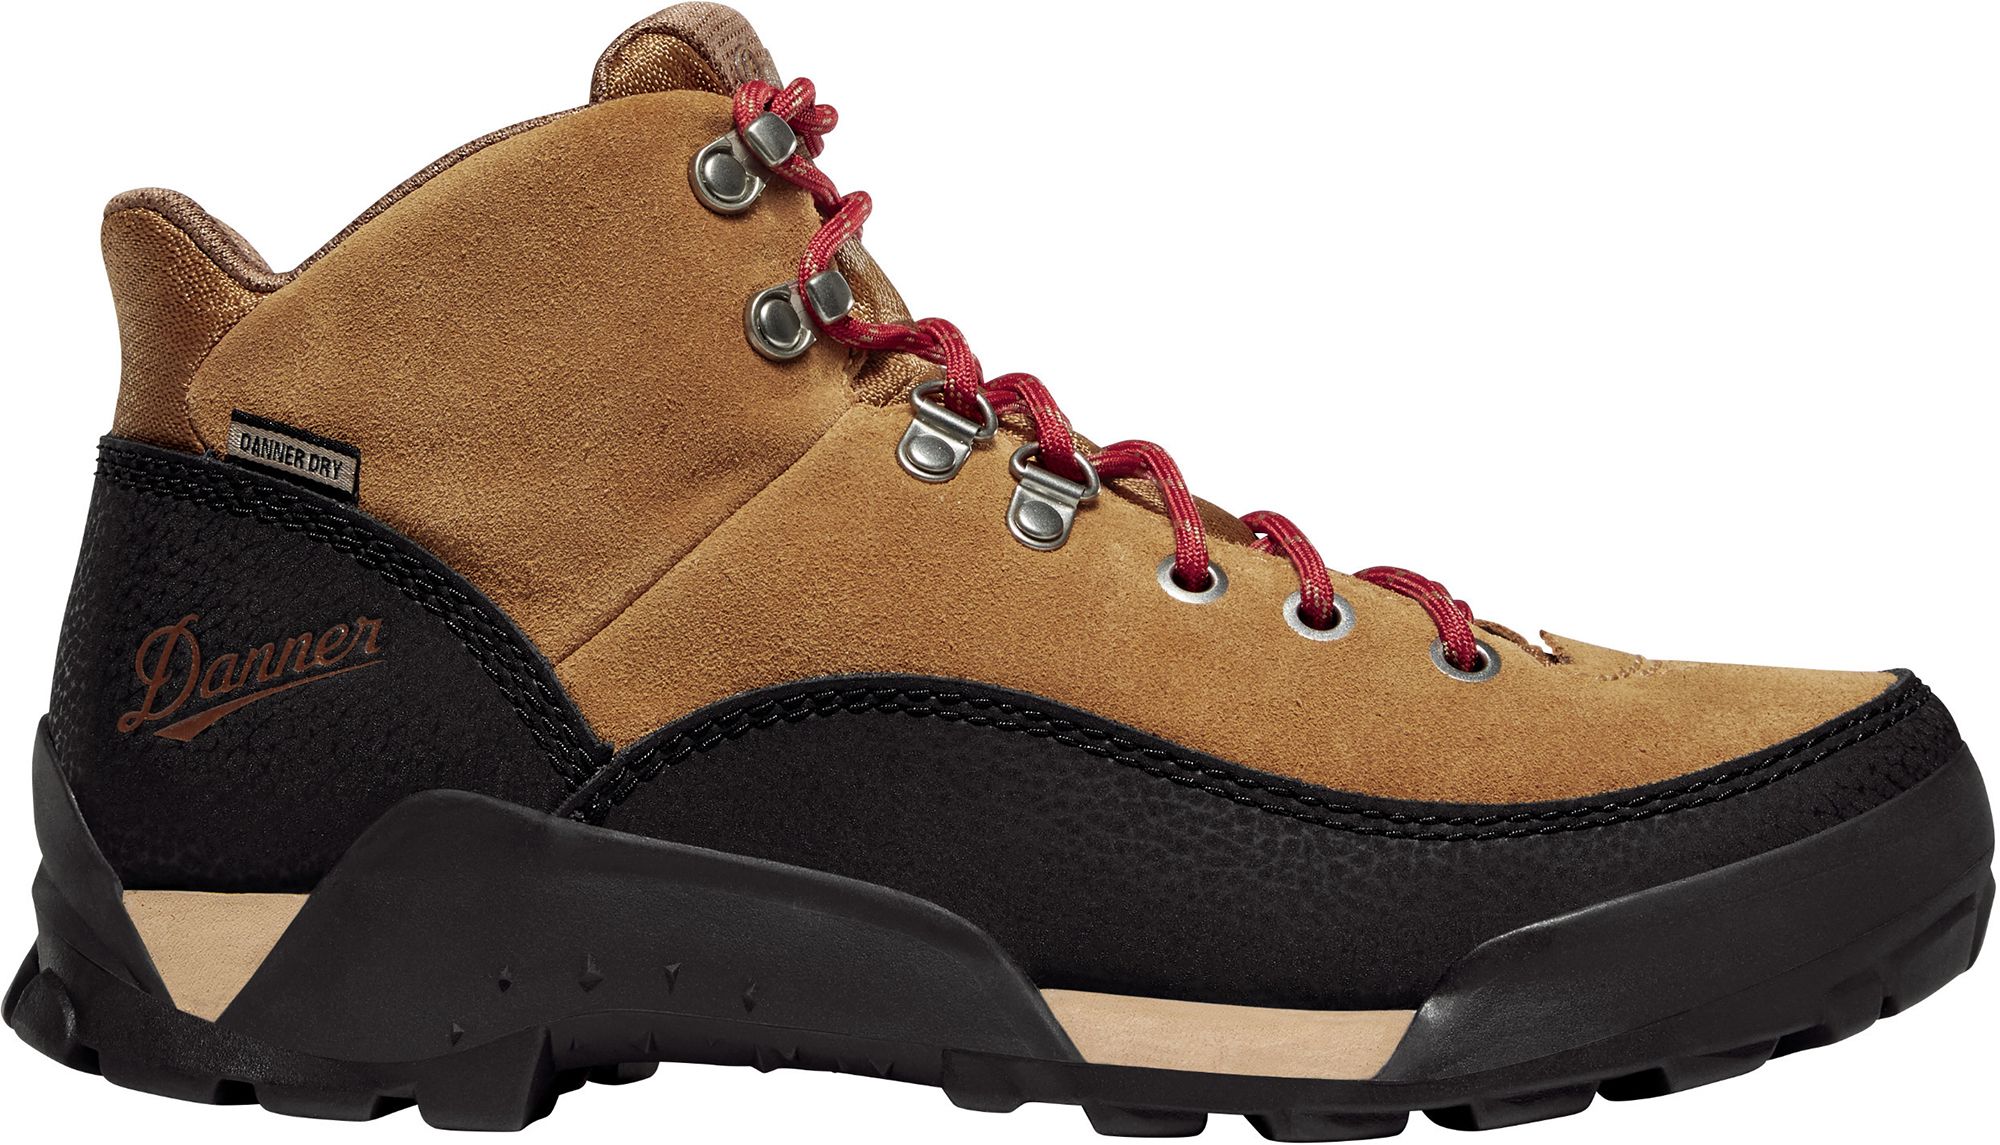 Photos - Trekking Shoes Danner Women's Panorama 6" Waterproof Hiking Boots, Size 7, Brown/Red 22DA 